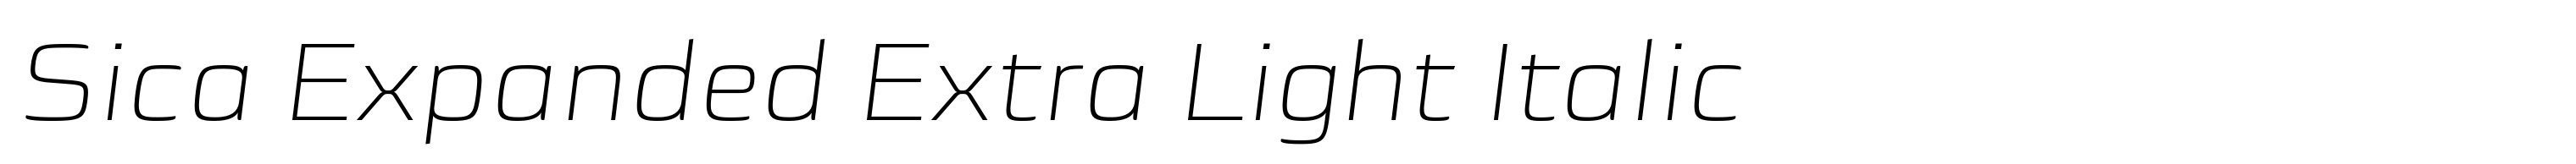 Sica Expanded Extra Light Italic